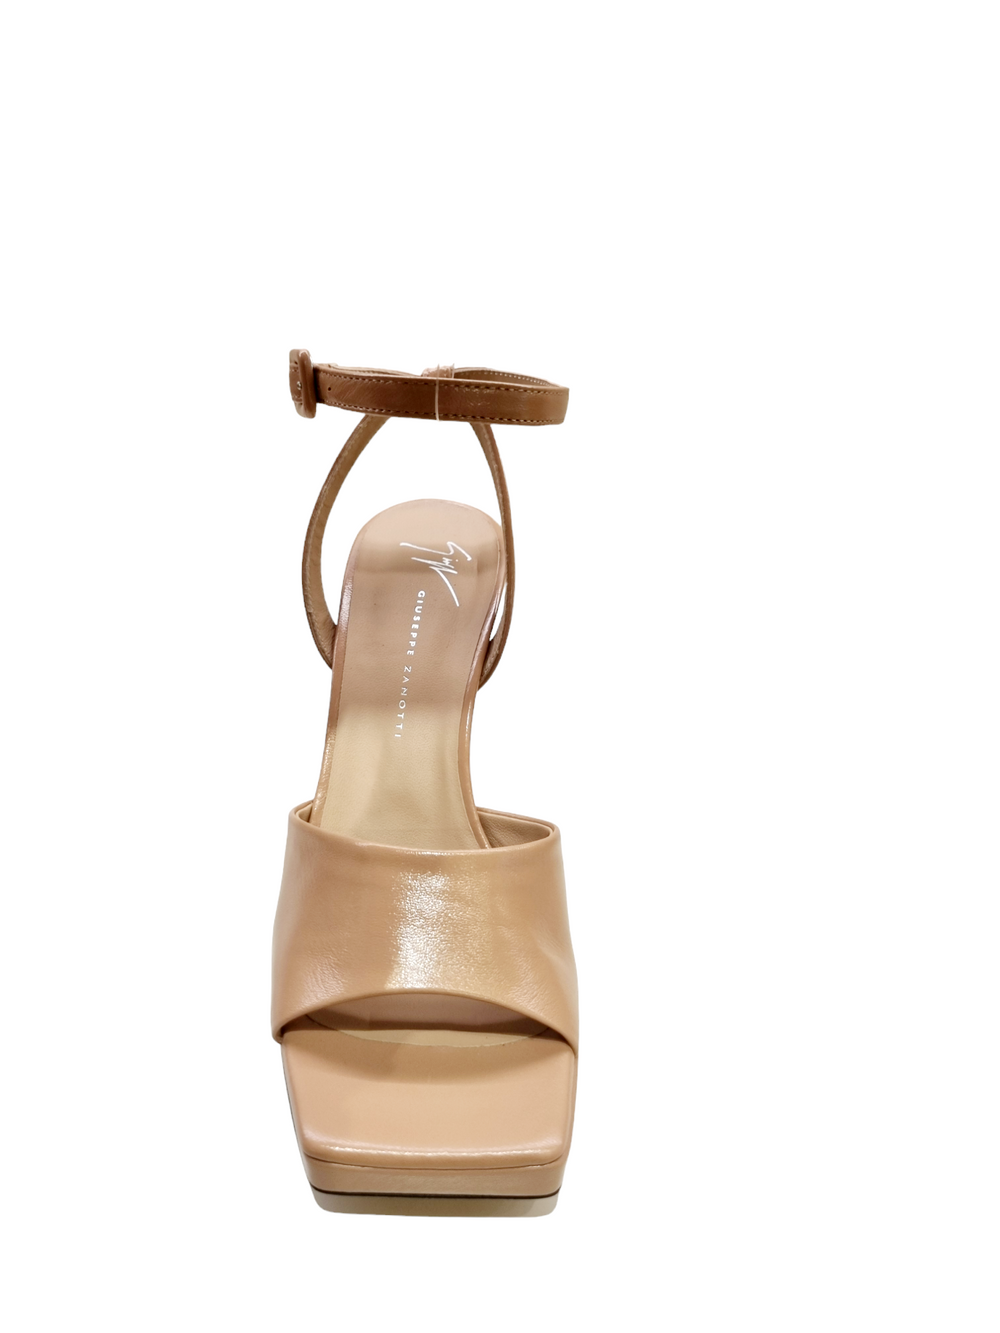 Vanilla Nude Platform Sandals - GIUSEPPE-ZANOTTI - Liberty Shoes Australia